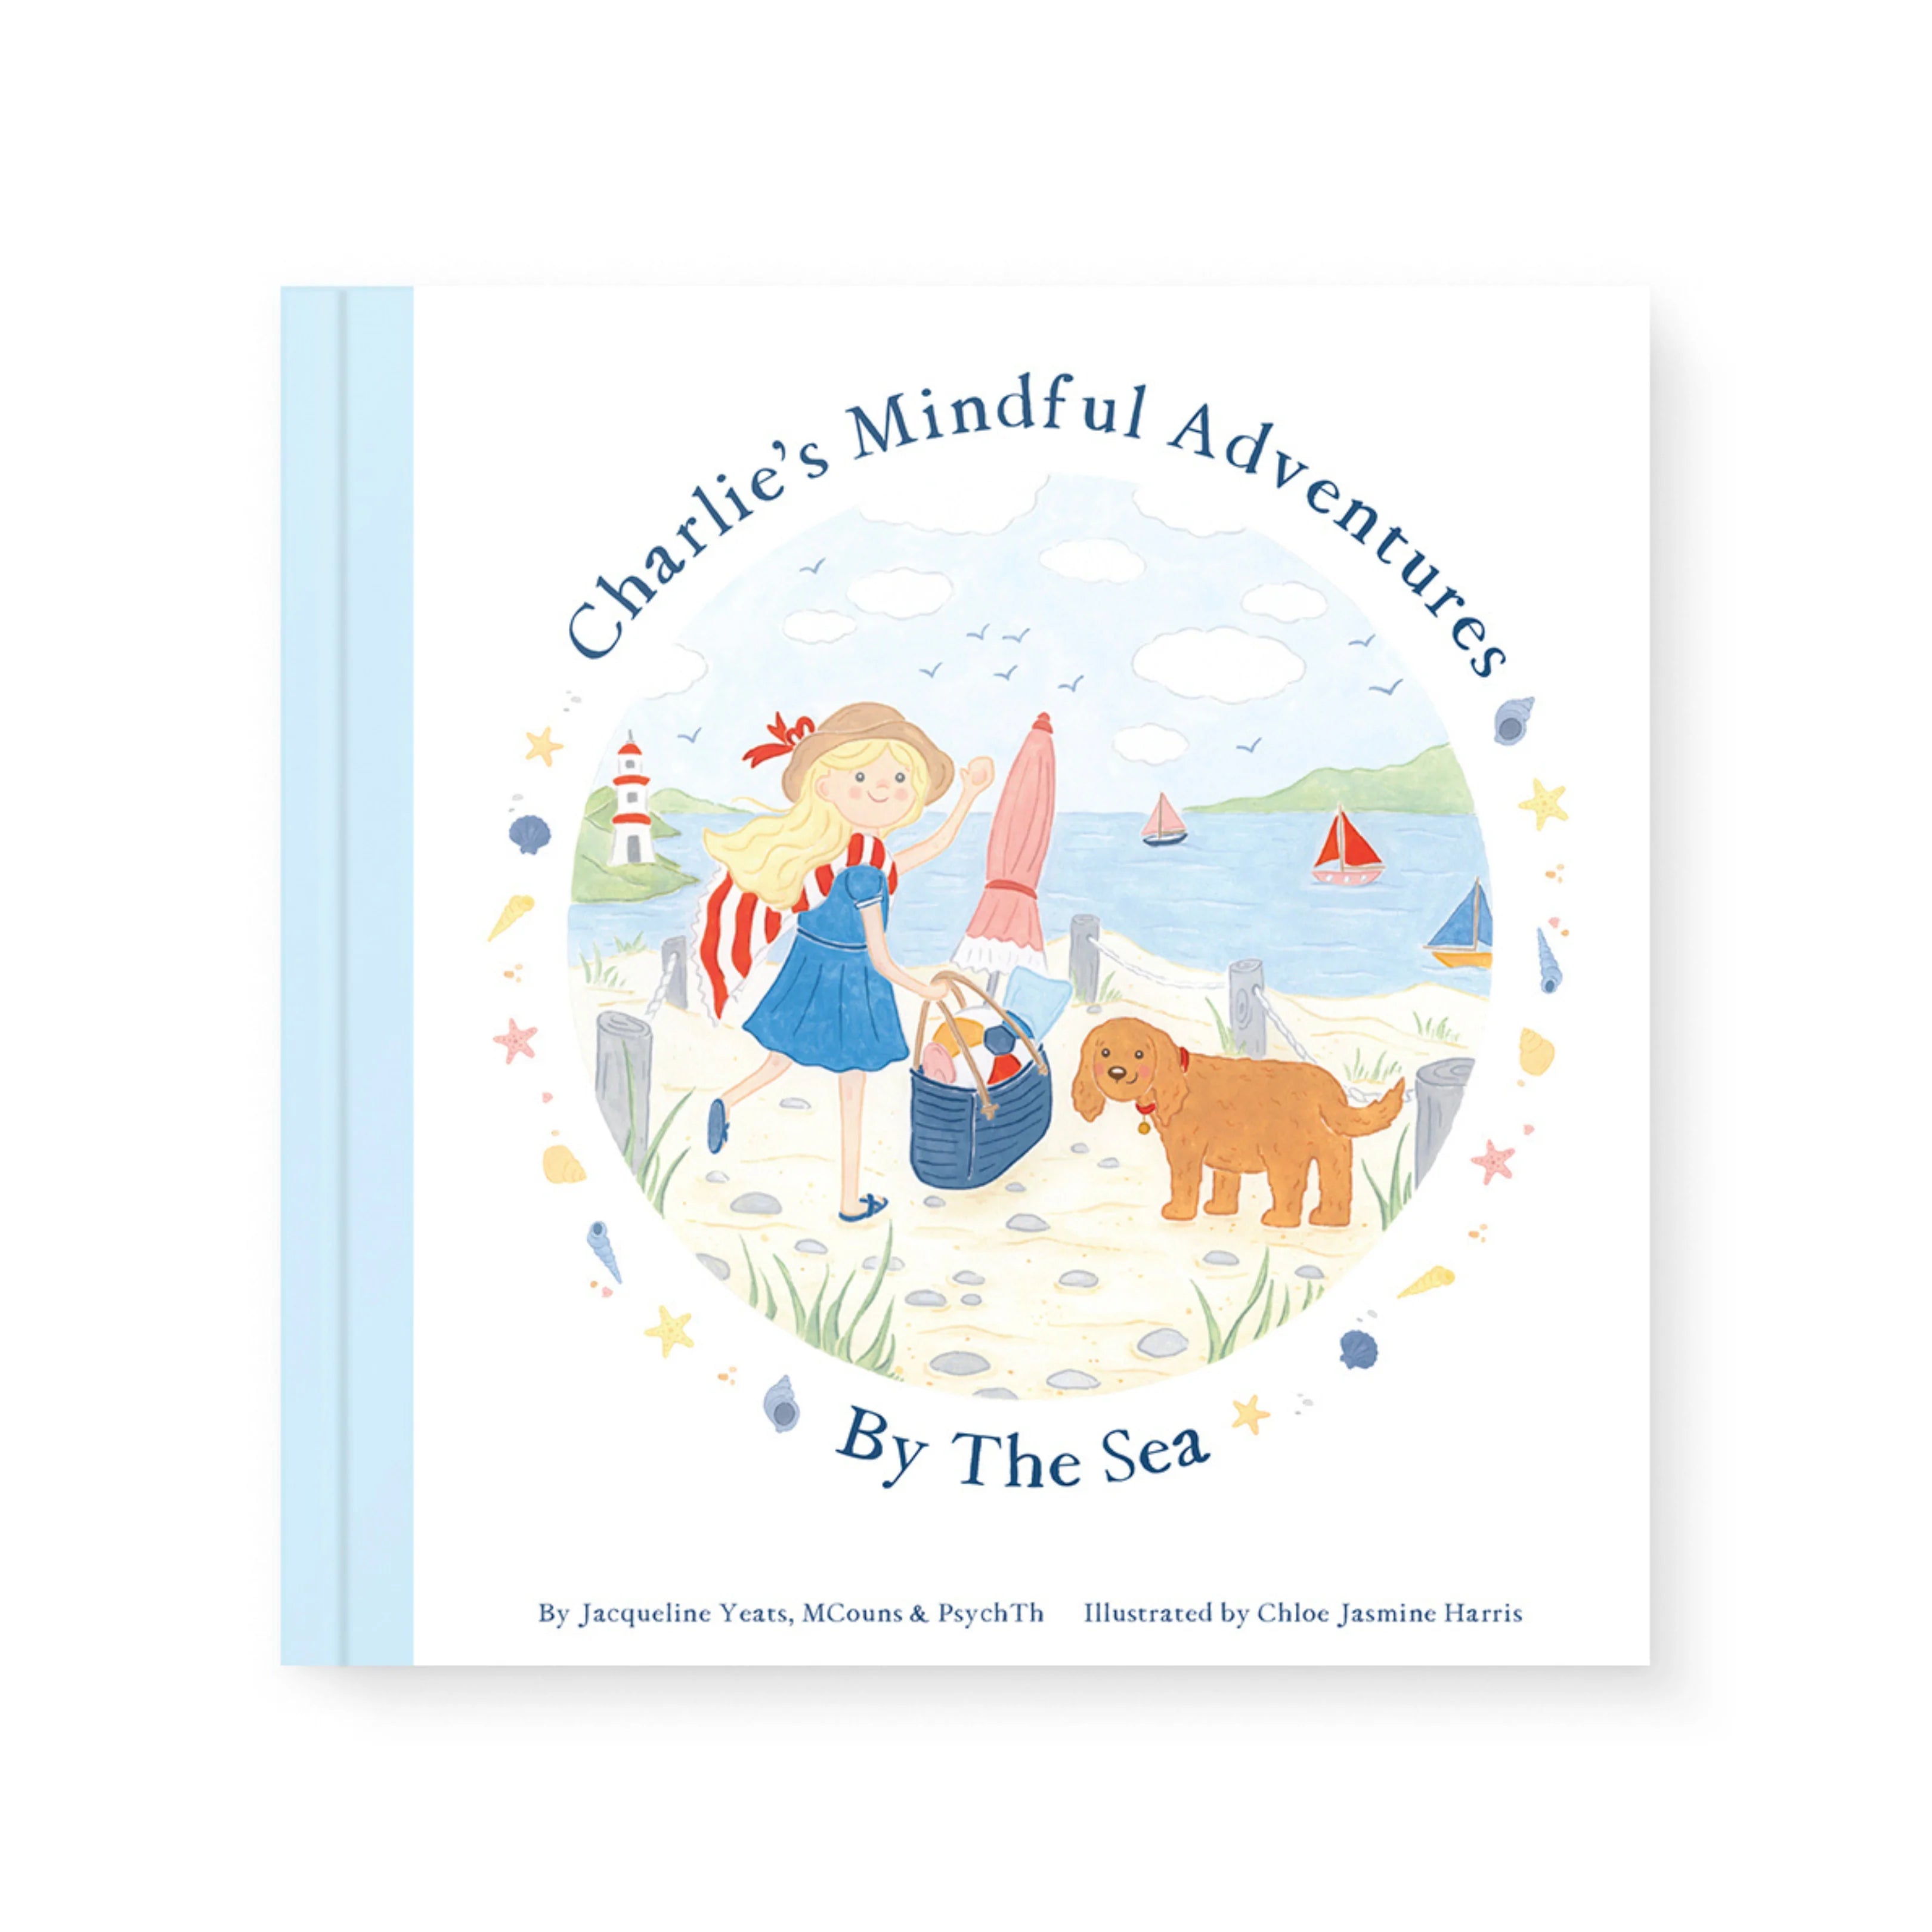 Mindful & Co Kids Charlie's Mindful Adventures